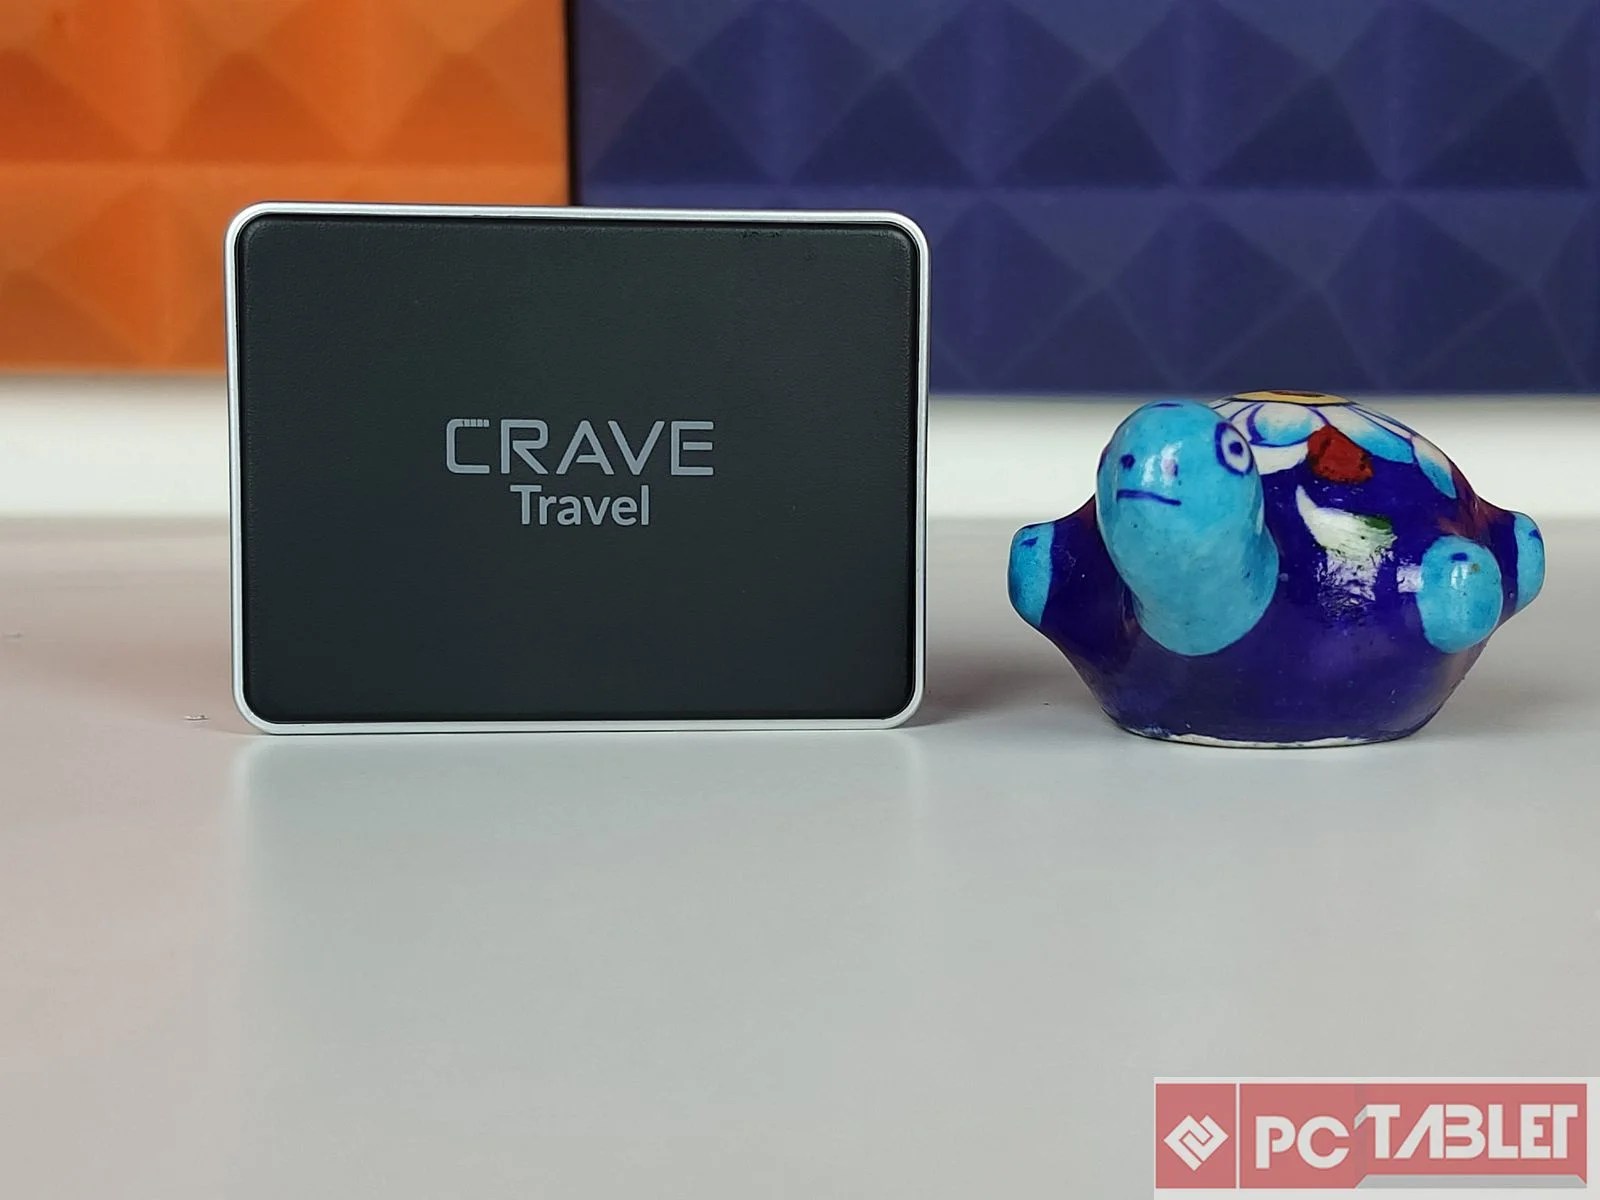 Crave Curve Mini Bluetooth speaker amp Crave Travel Power bank Review 1